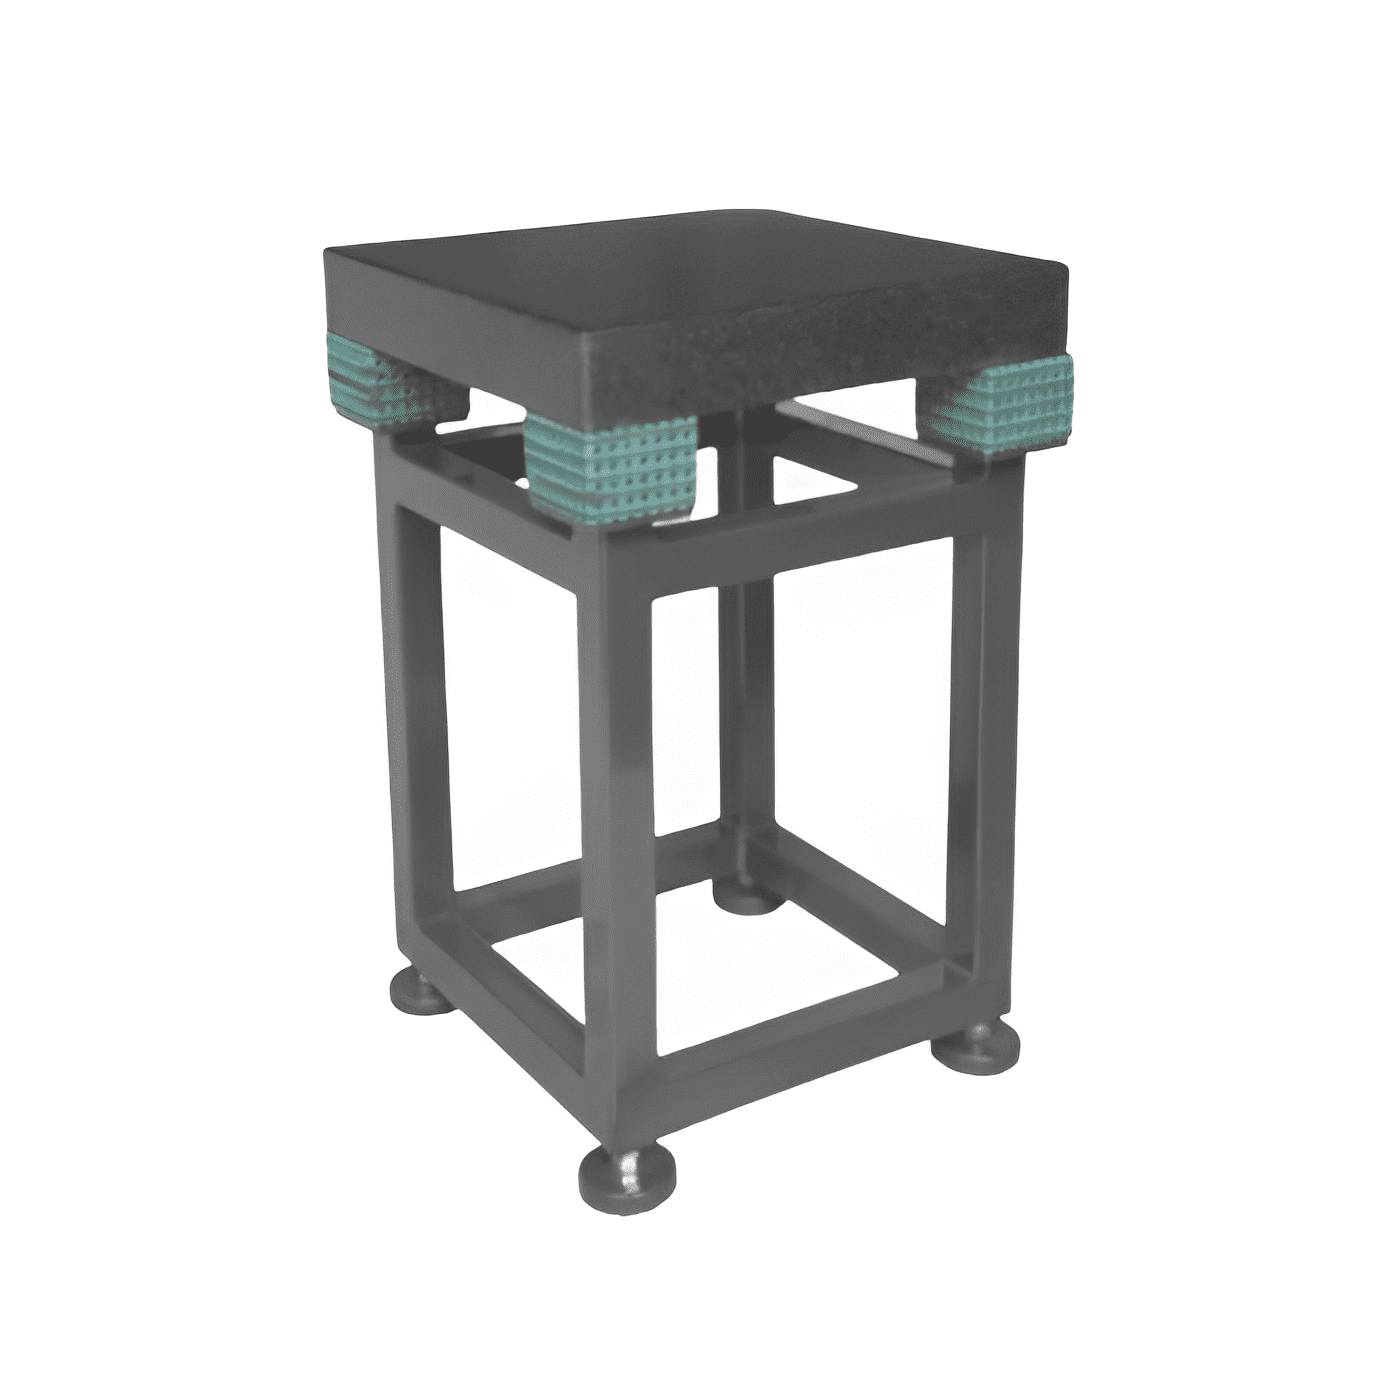 Shock Resistant -Anti-Vibration Table with Elastomeric Mounts